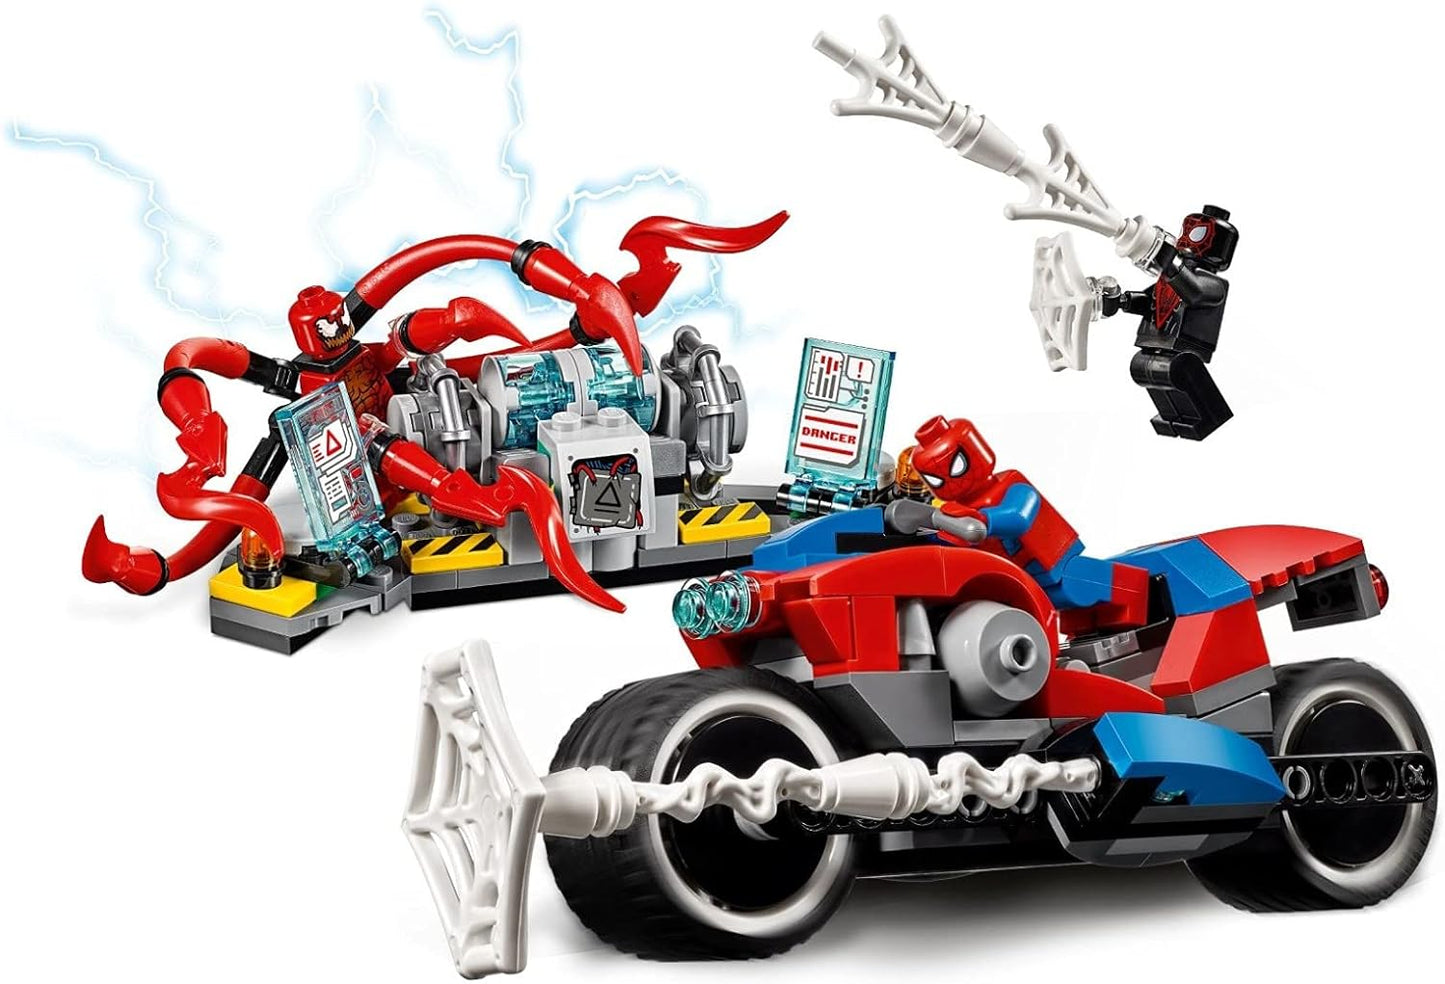 LEGO 76113 Super Heroes Spider-Man Bike Rescue Building Set, Marvel Toy Vehicles for Kids